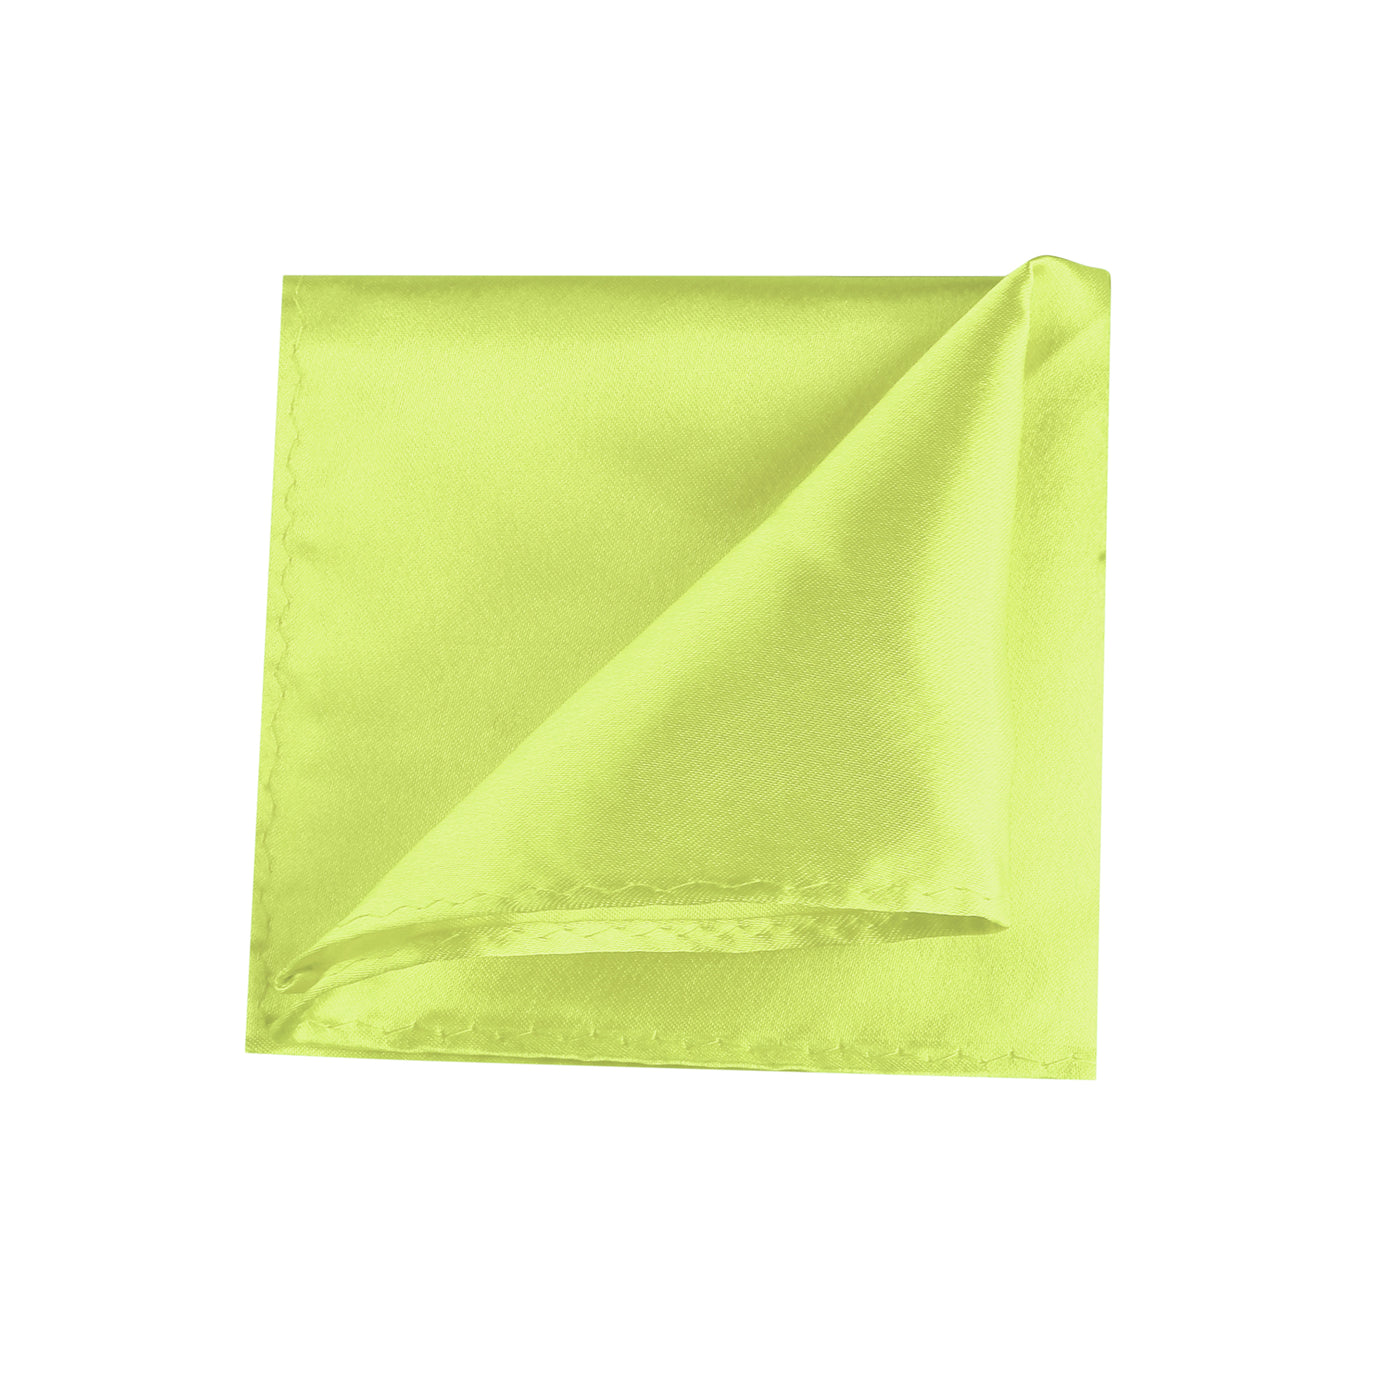 Allegra K Pocket Squares Handkerchiefs Solid Color for Wedding Party